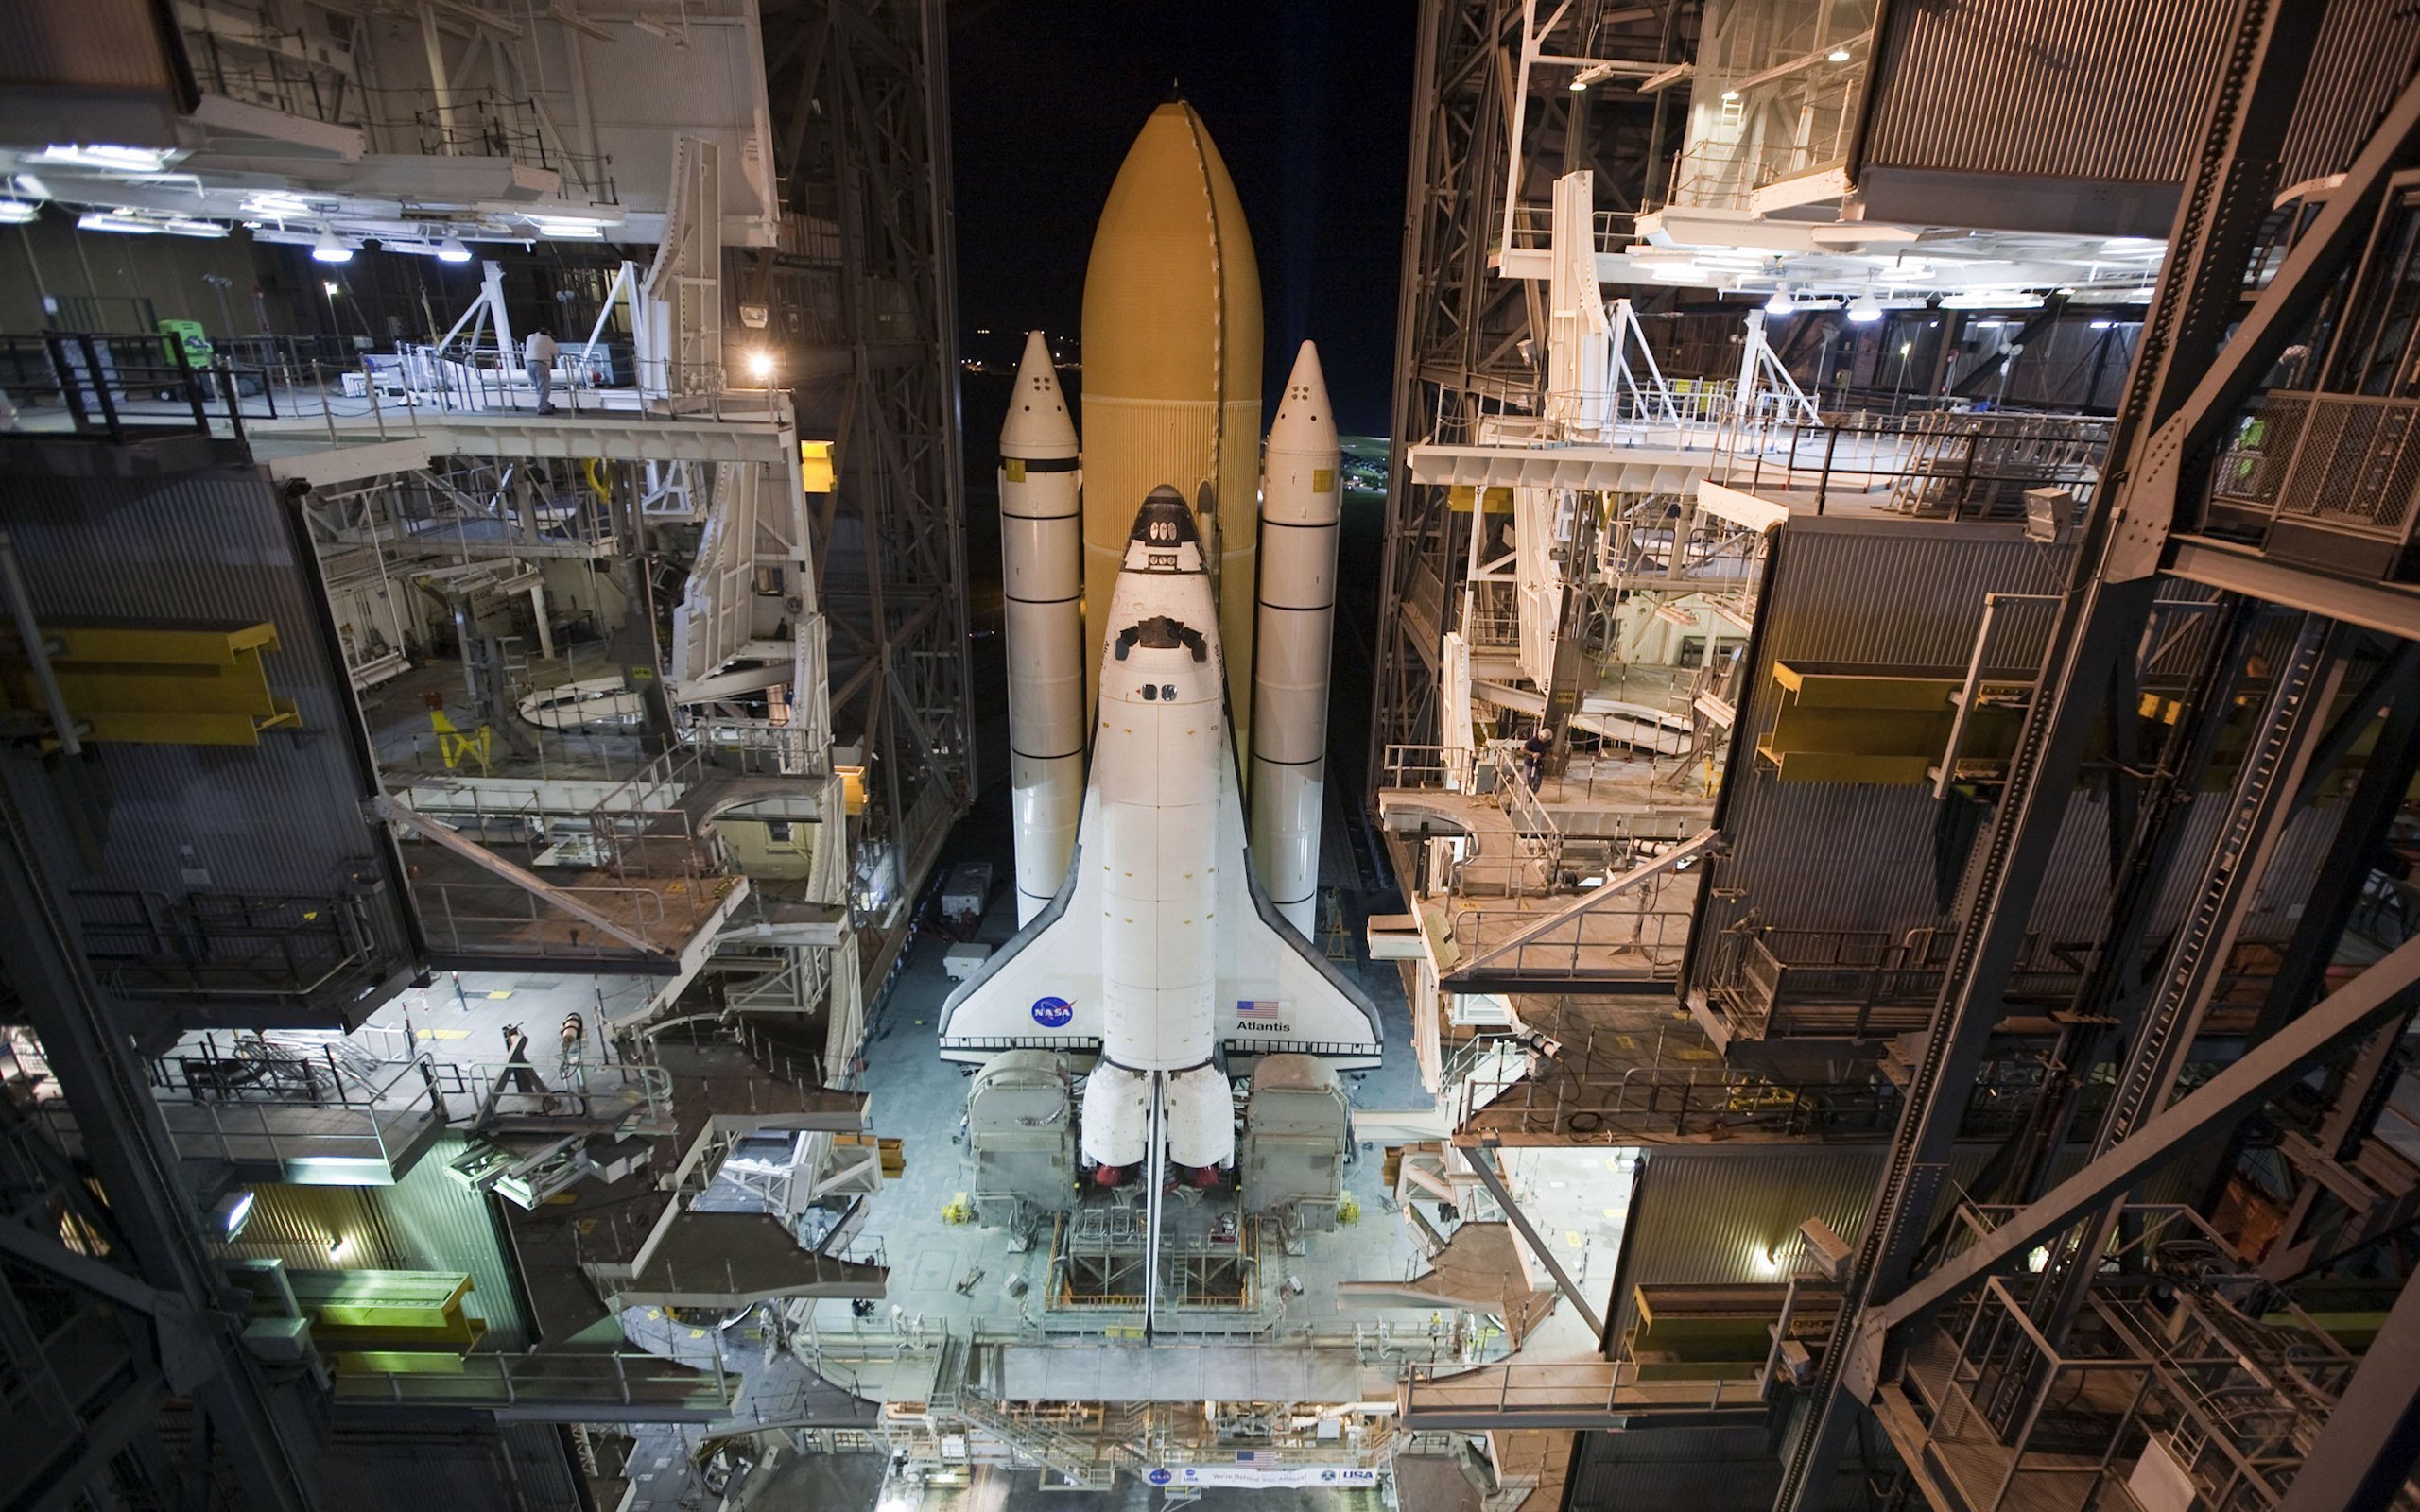 space shuttle atlantis, vehicles, space shuttles